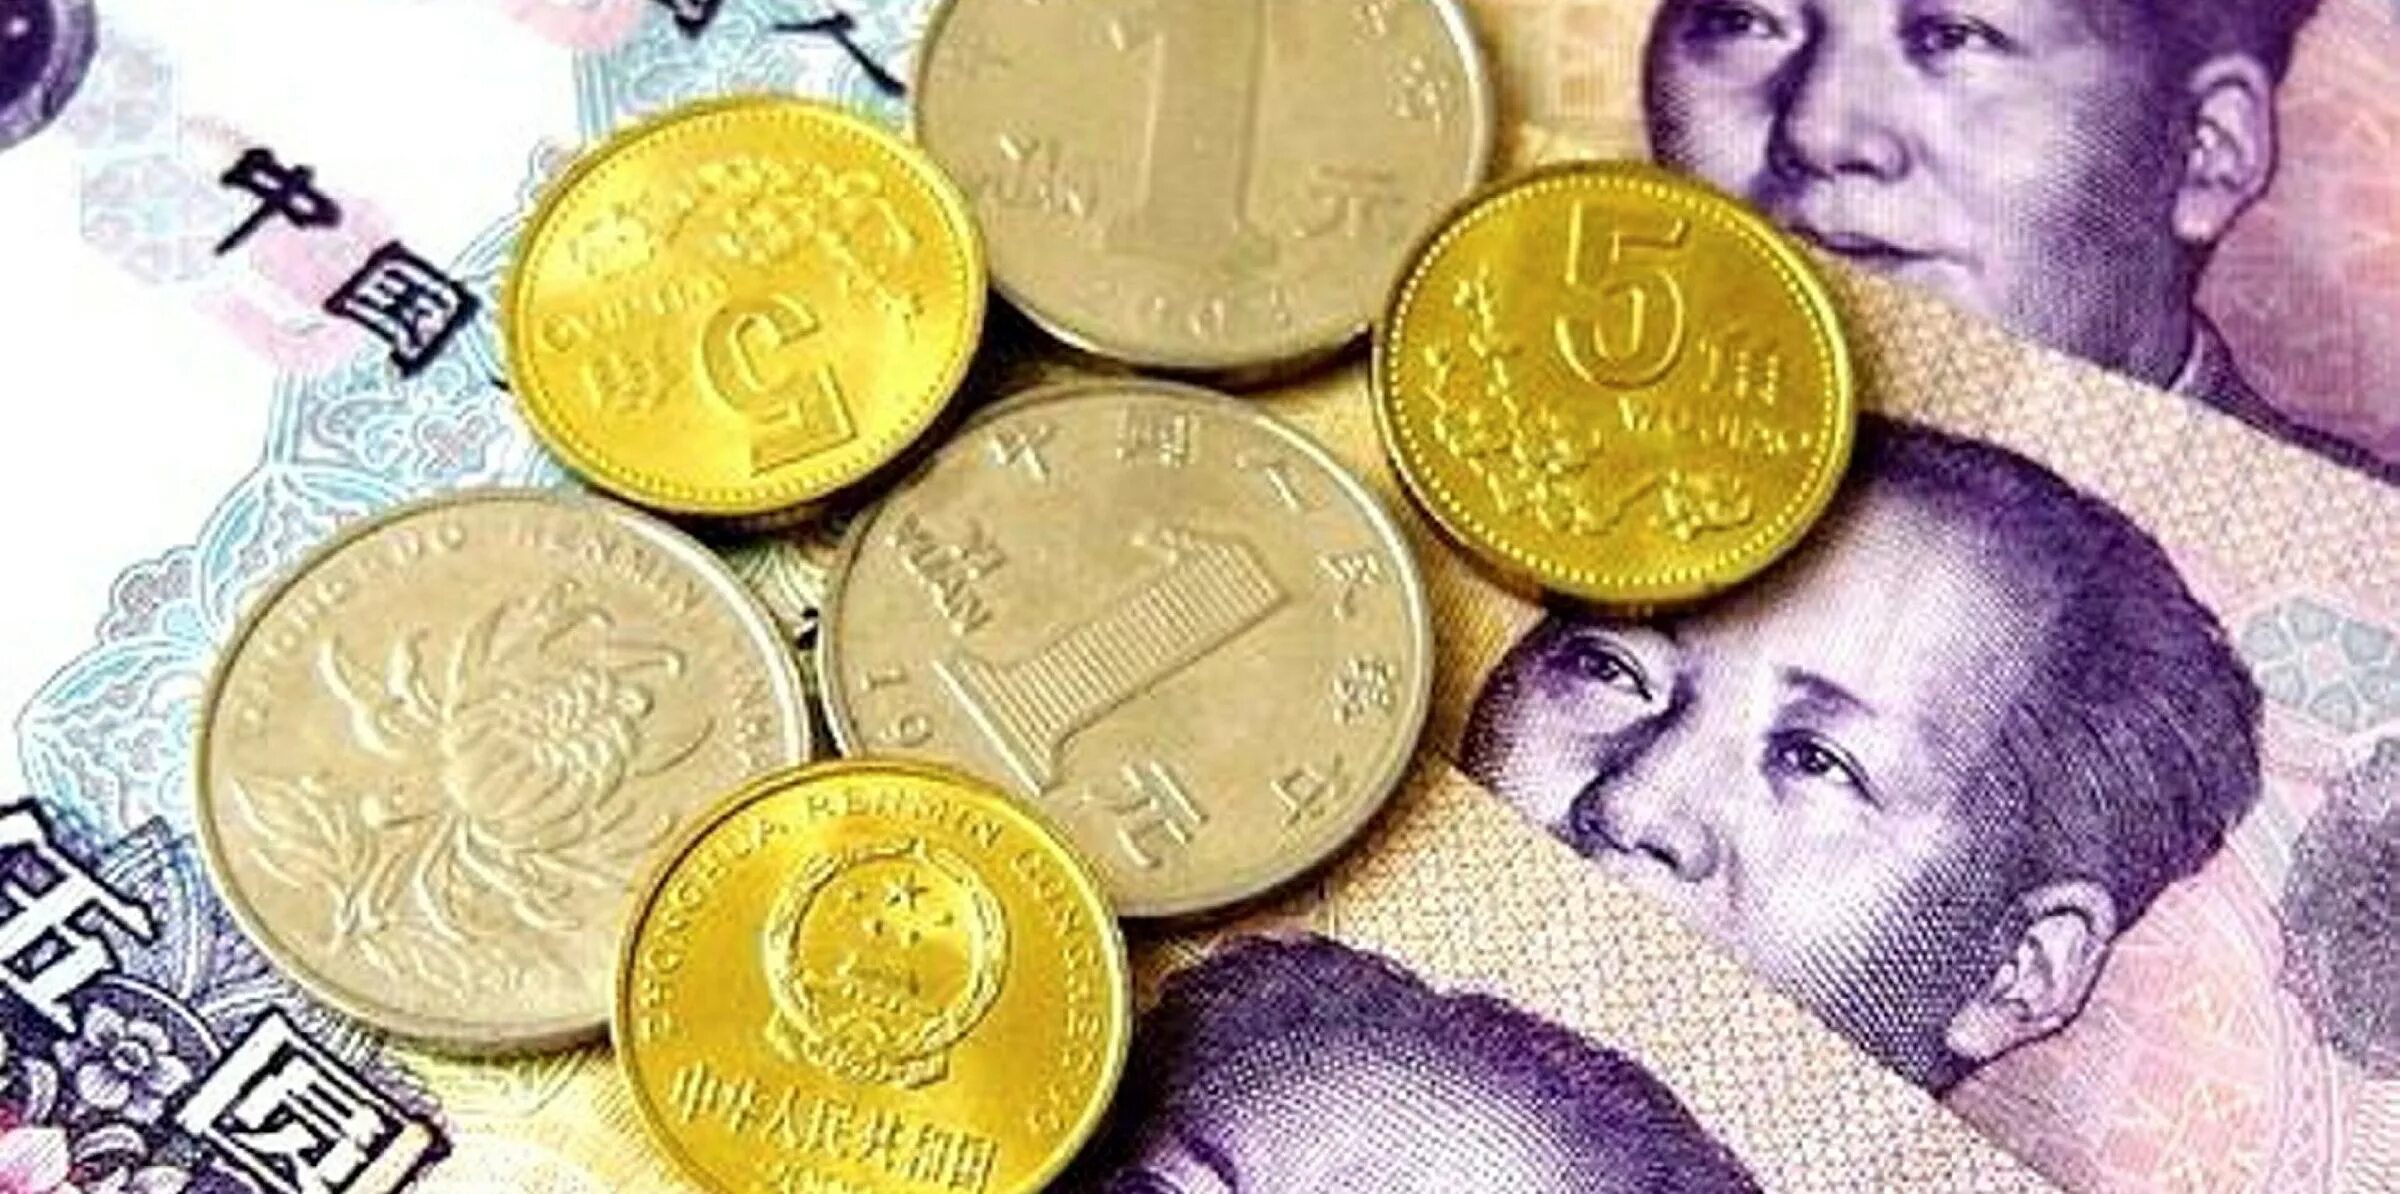 Валюта Китая юань. Денежная единица Китая юань. Купюры и монеты Китая. Юань (валюта).